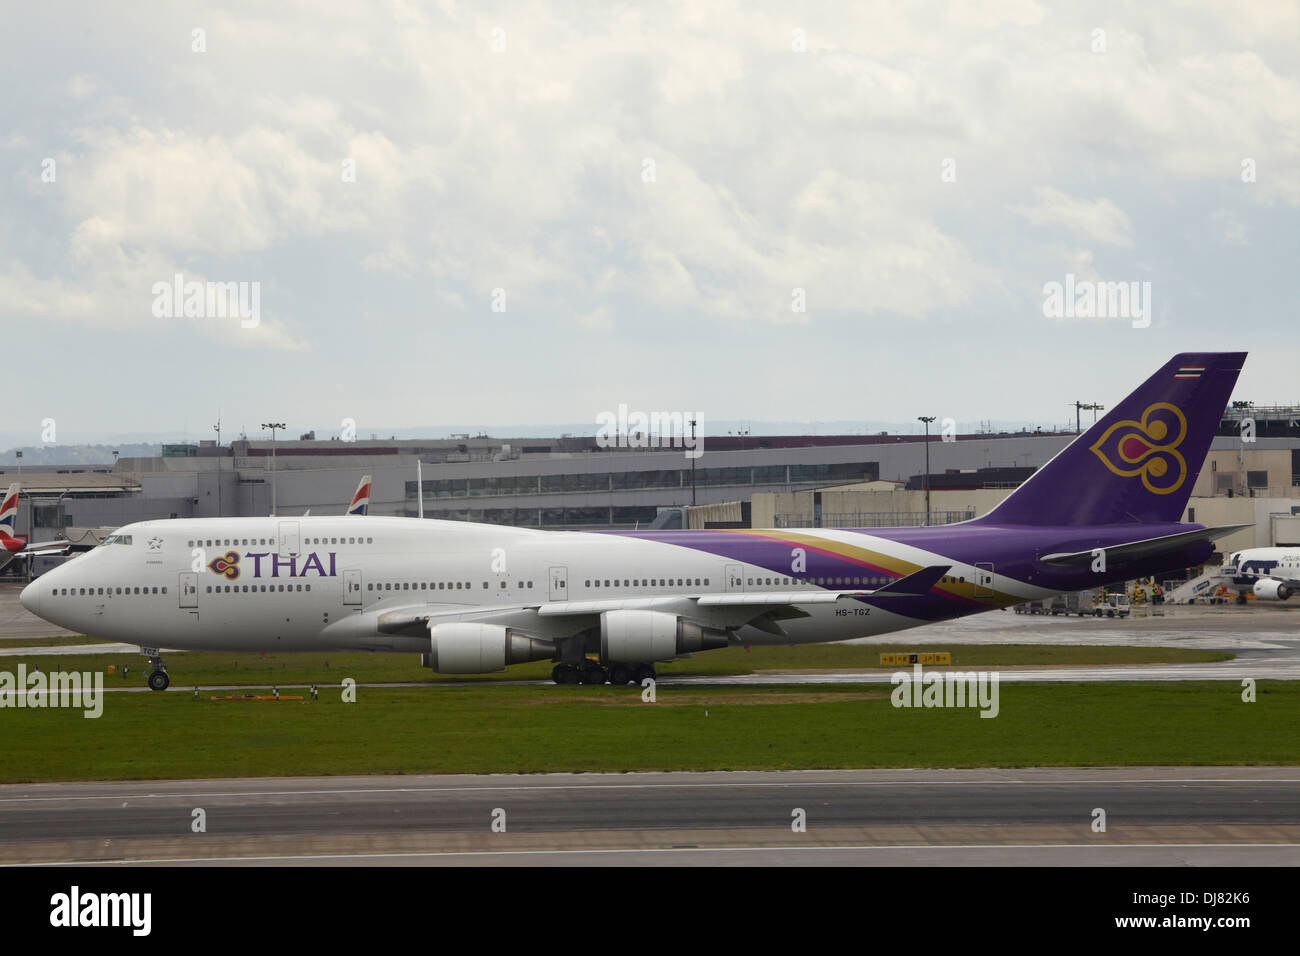 Thai Airways boeing 747 jumbo jet in rullaggio a London Heathrow Airport Foto Stock